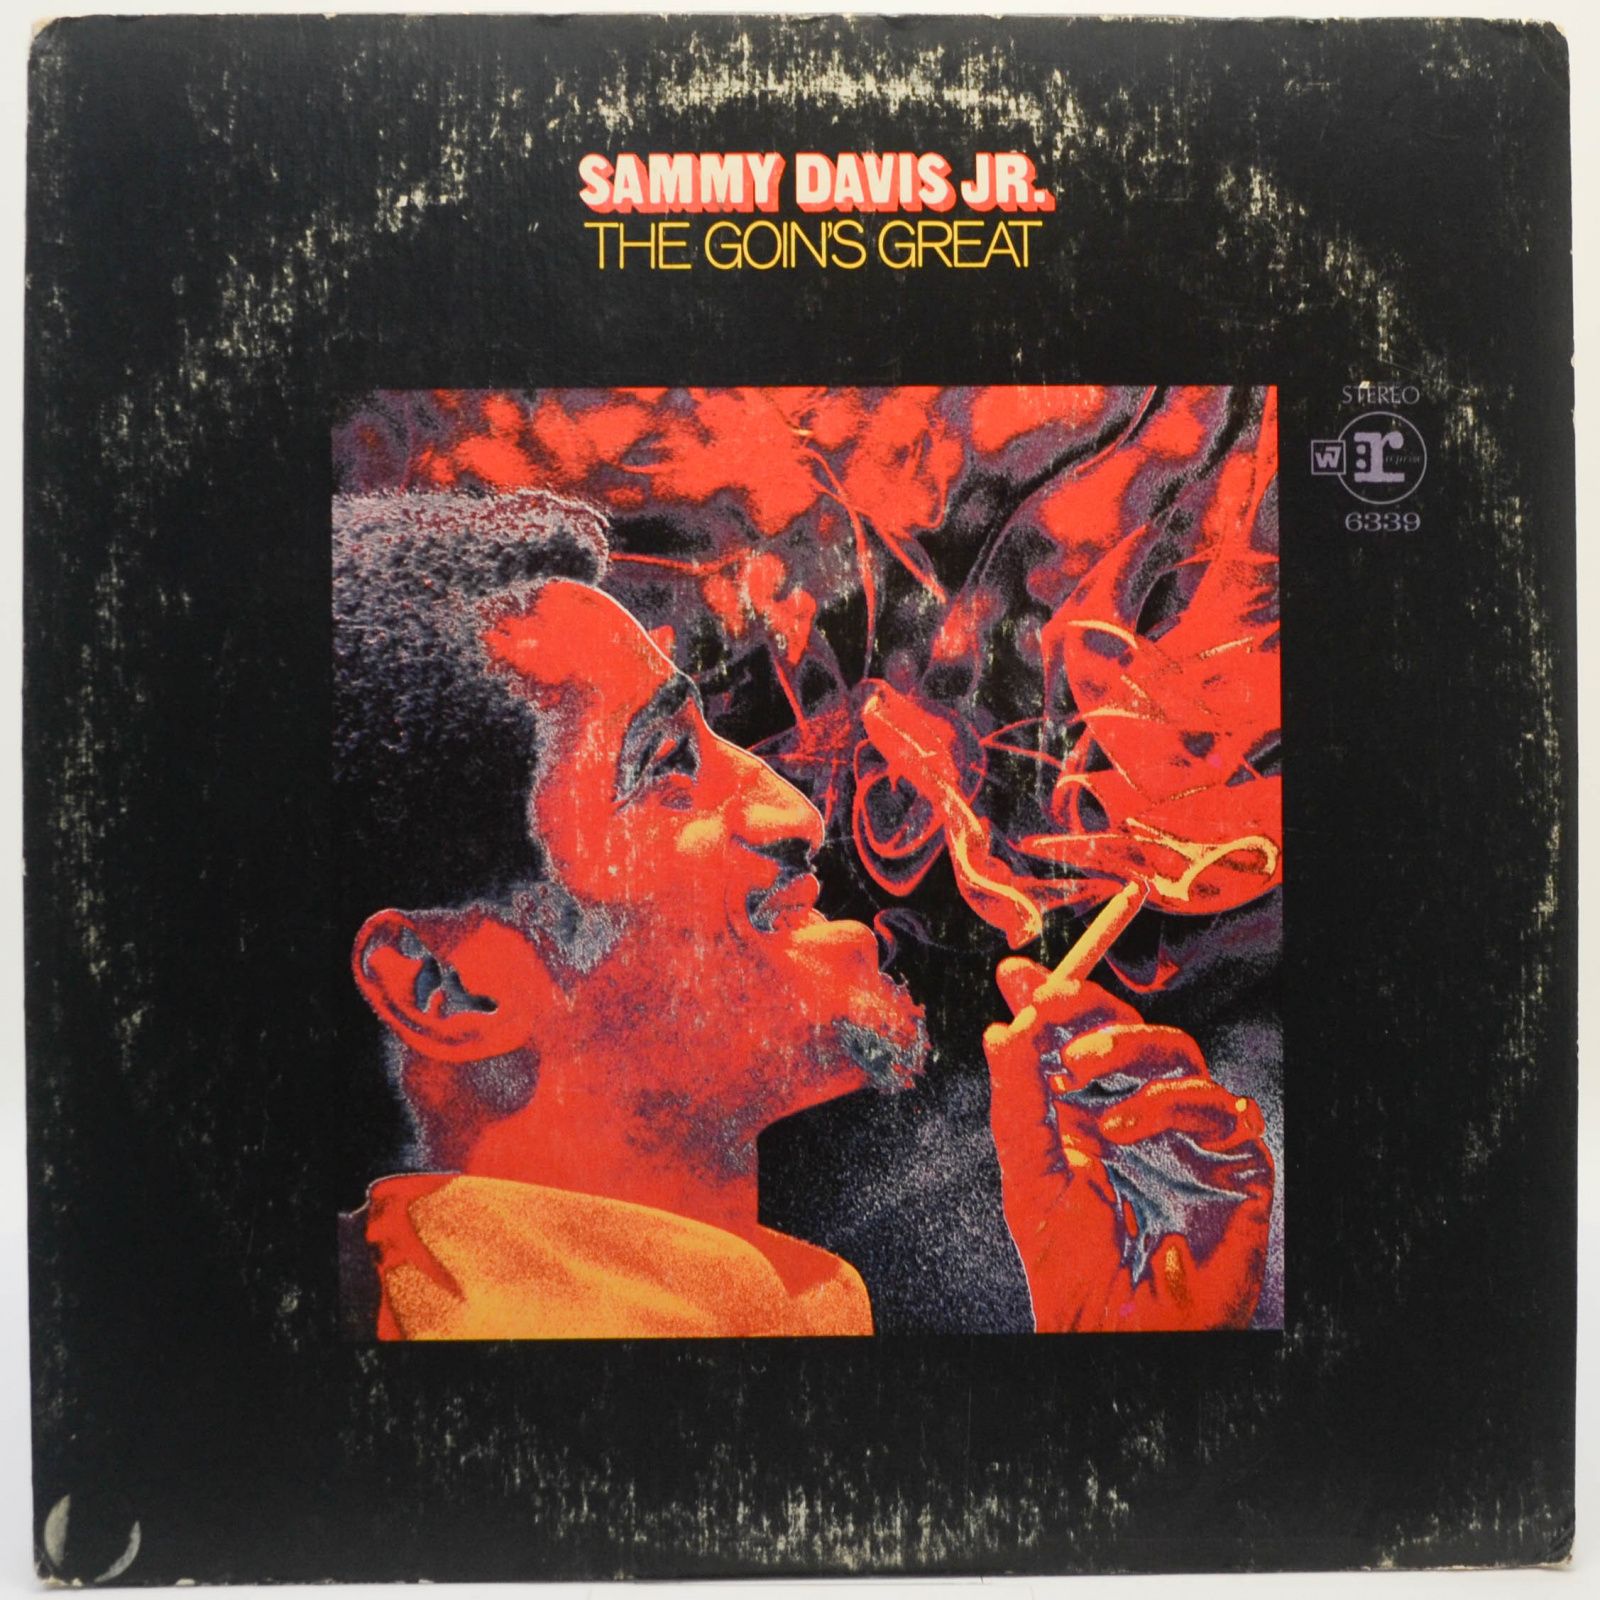 Sammy Davis Jr. — The Goin's Great, 1969